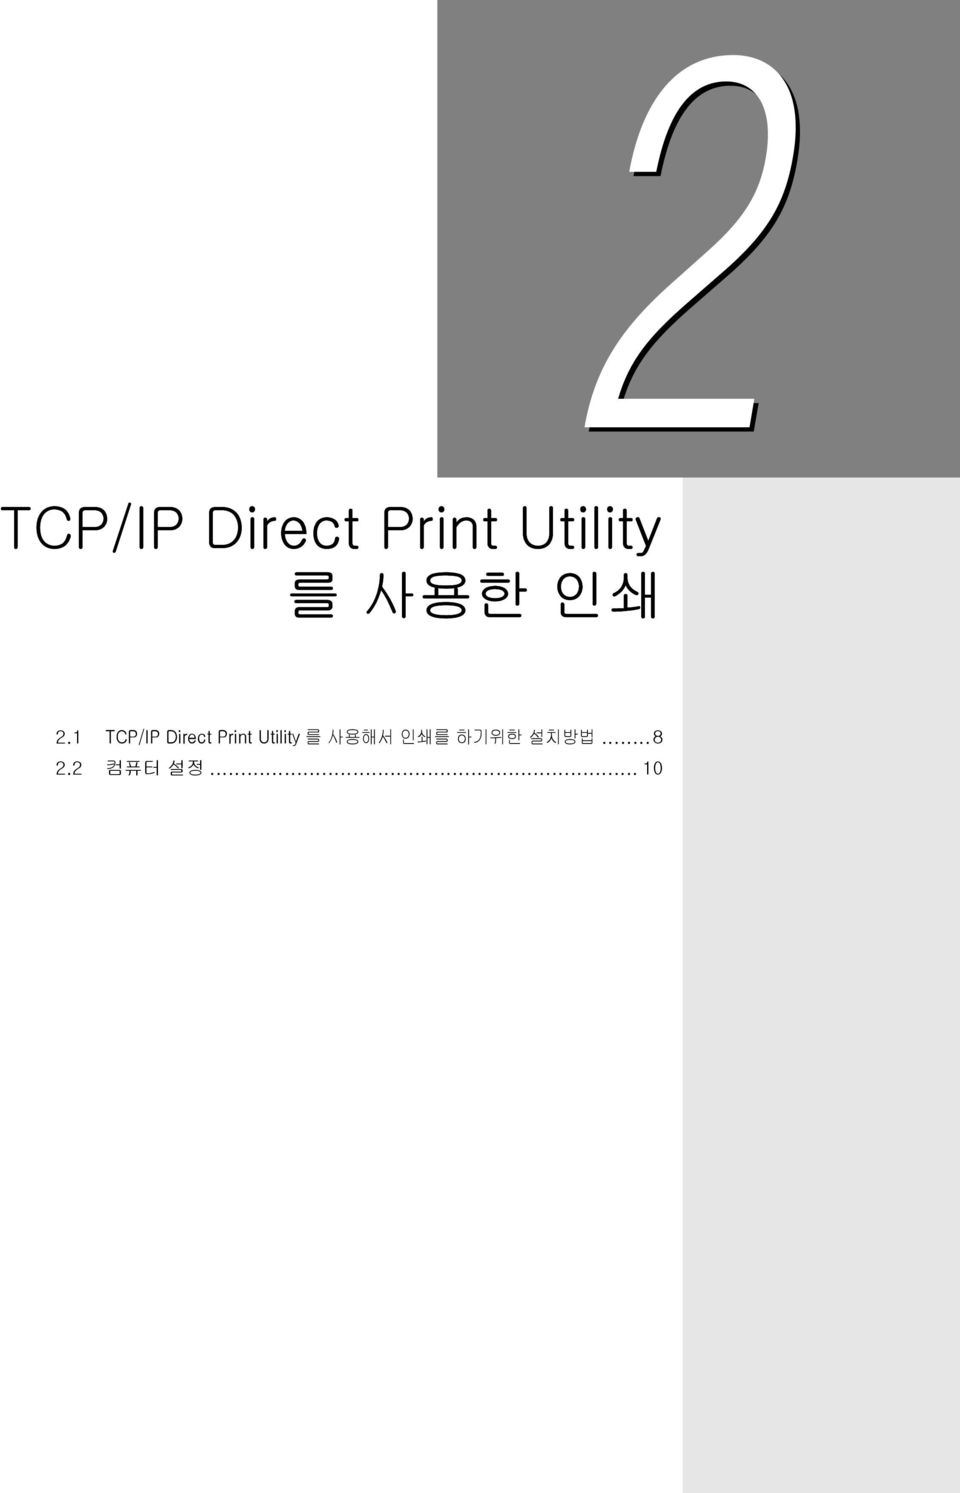 1 TCP/IP Direct Print